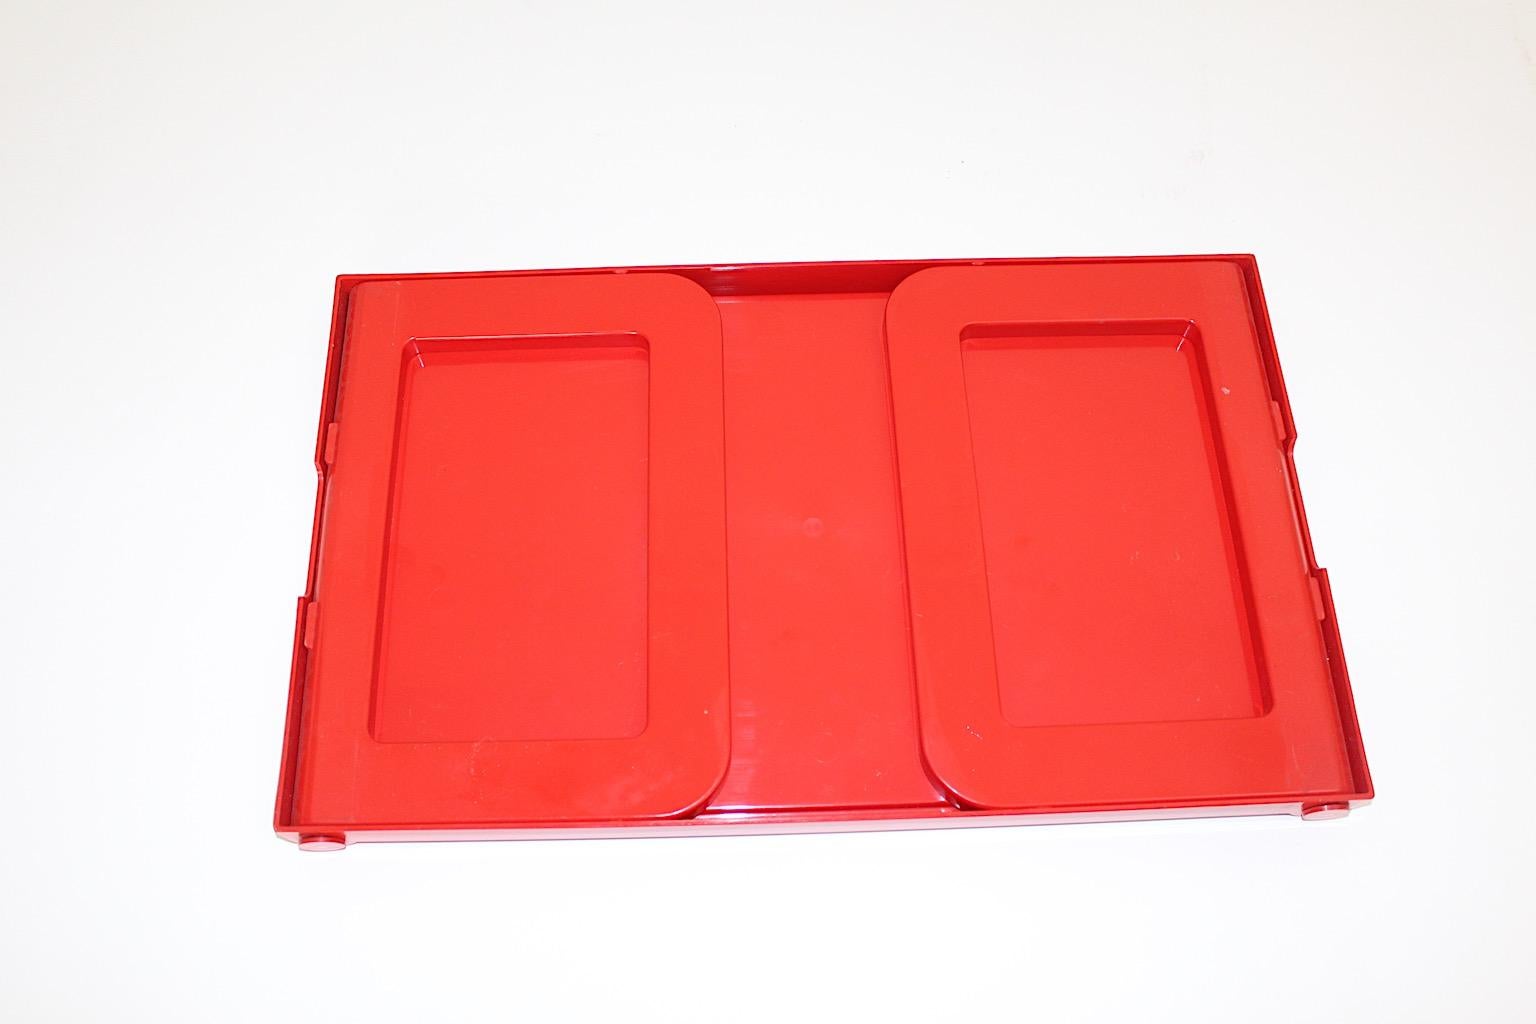 Space Age Red Plastic Tray Table or Gueridon Pepito Luigi Massoni for Guzzini For Sale 4